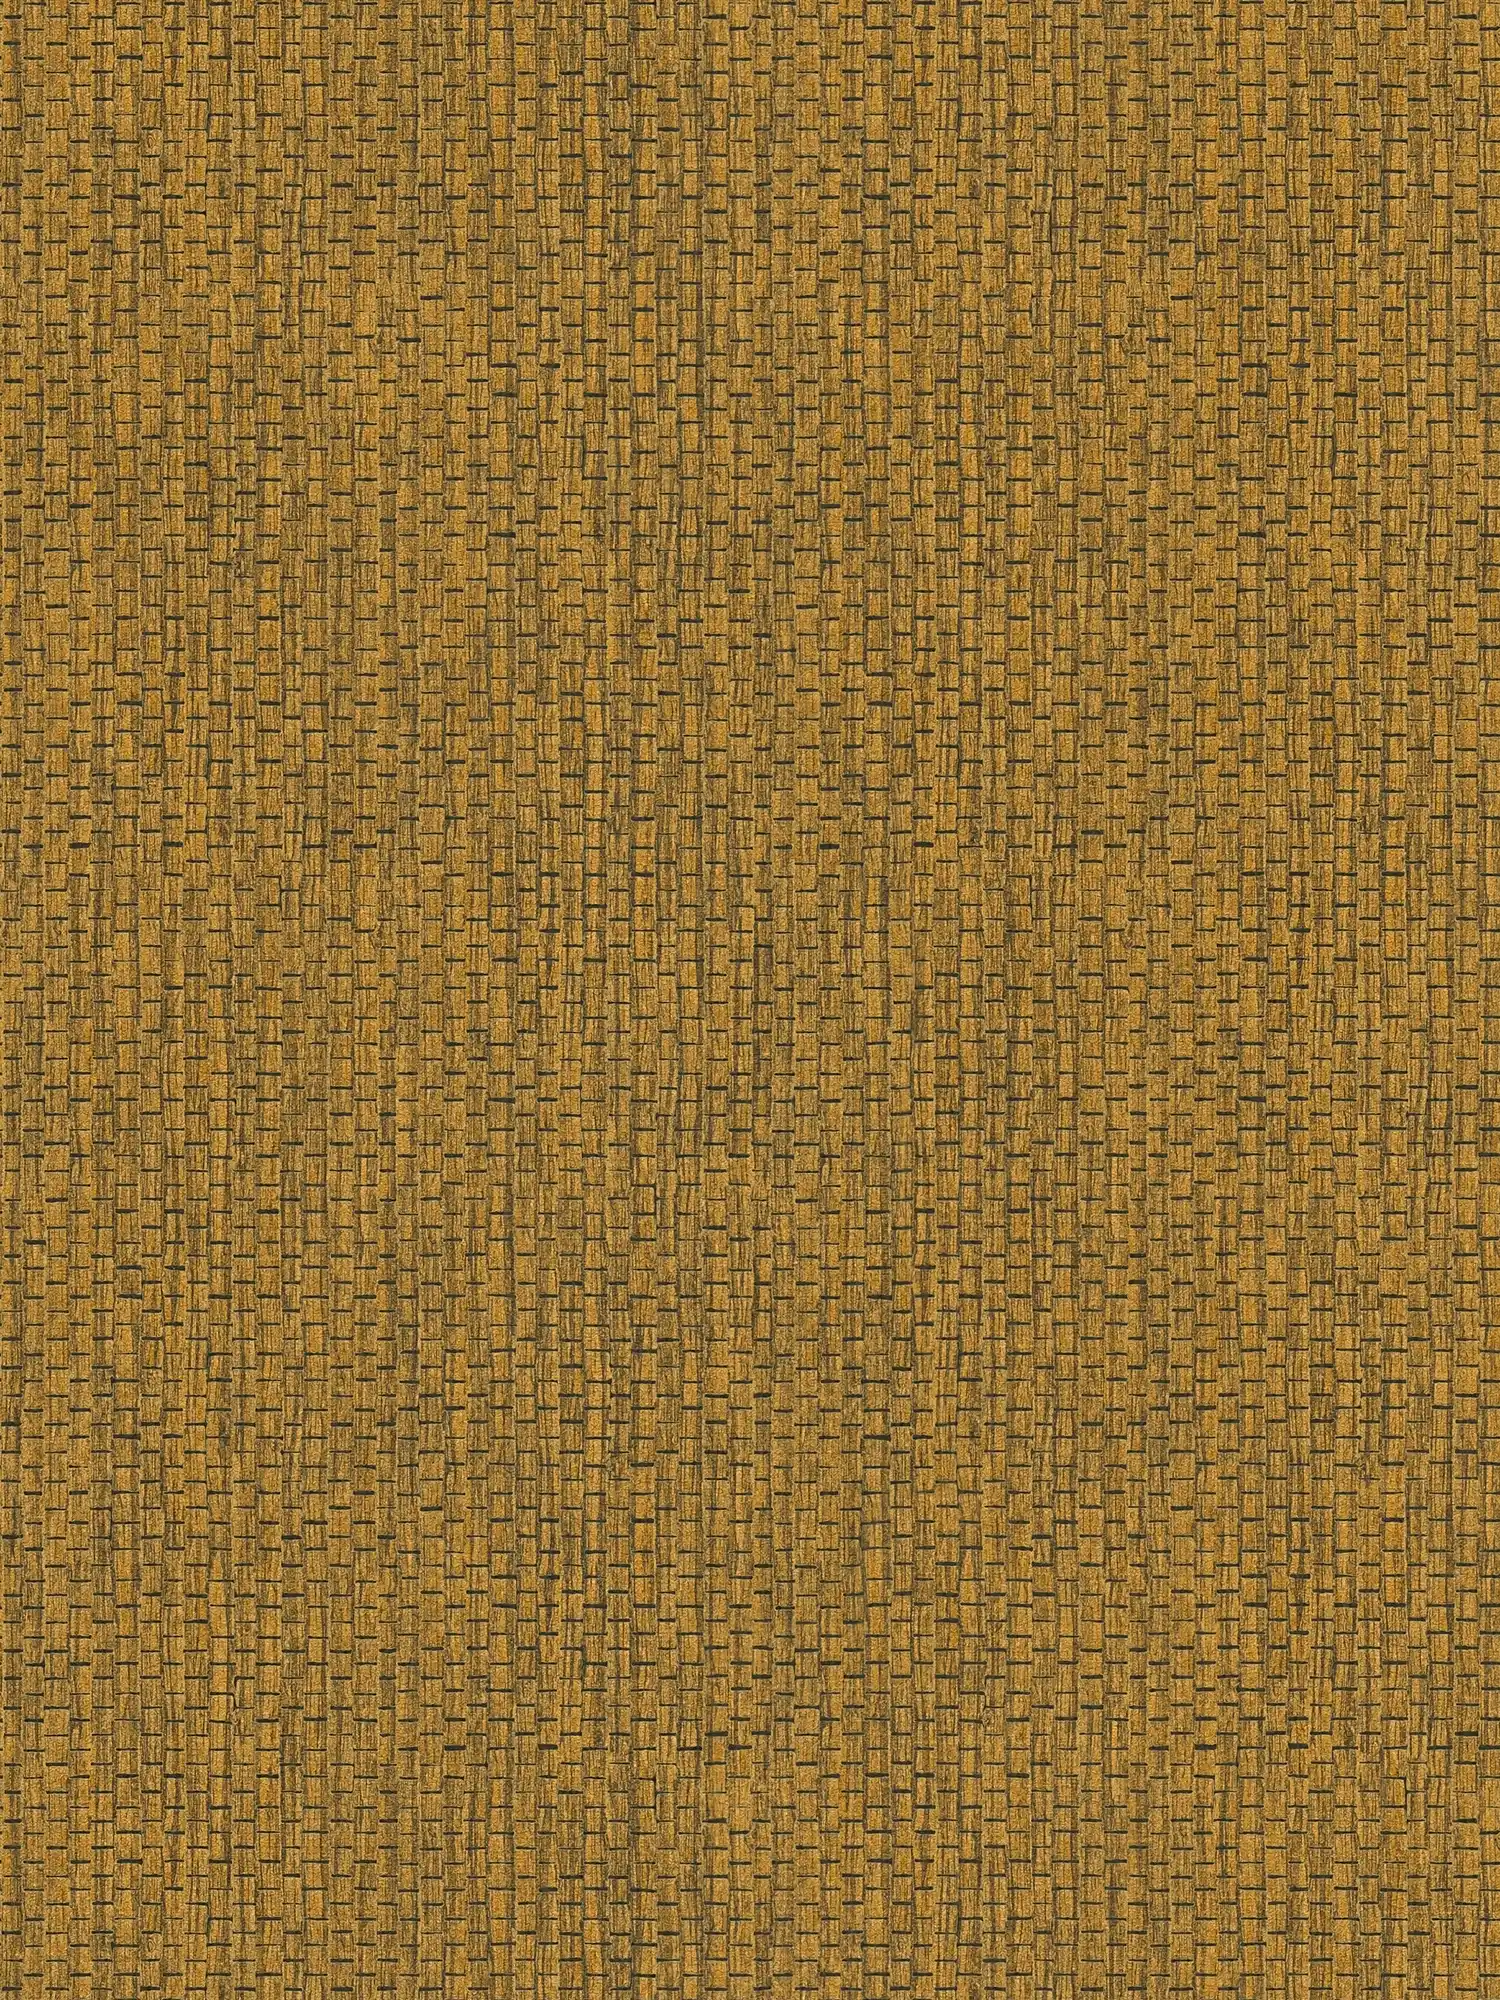 Wallpaper with raffia mats design - brown, yellow
